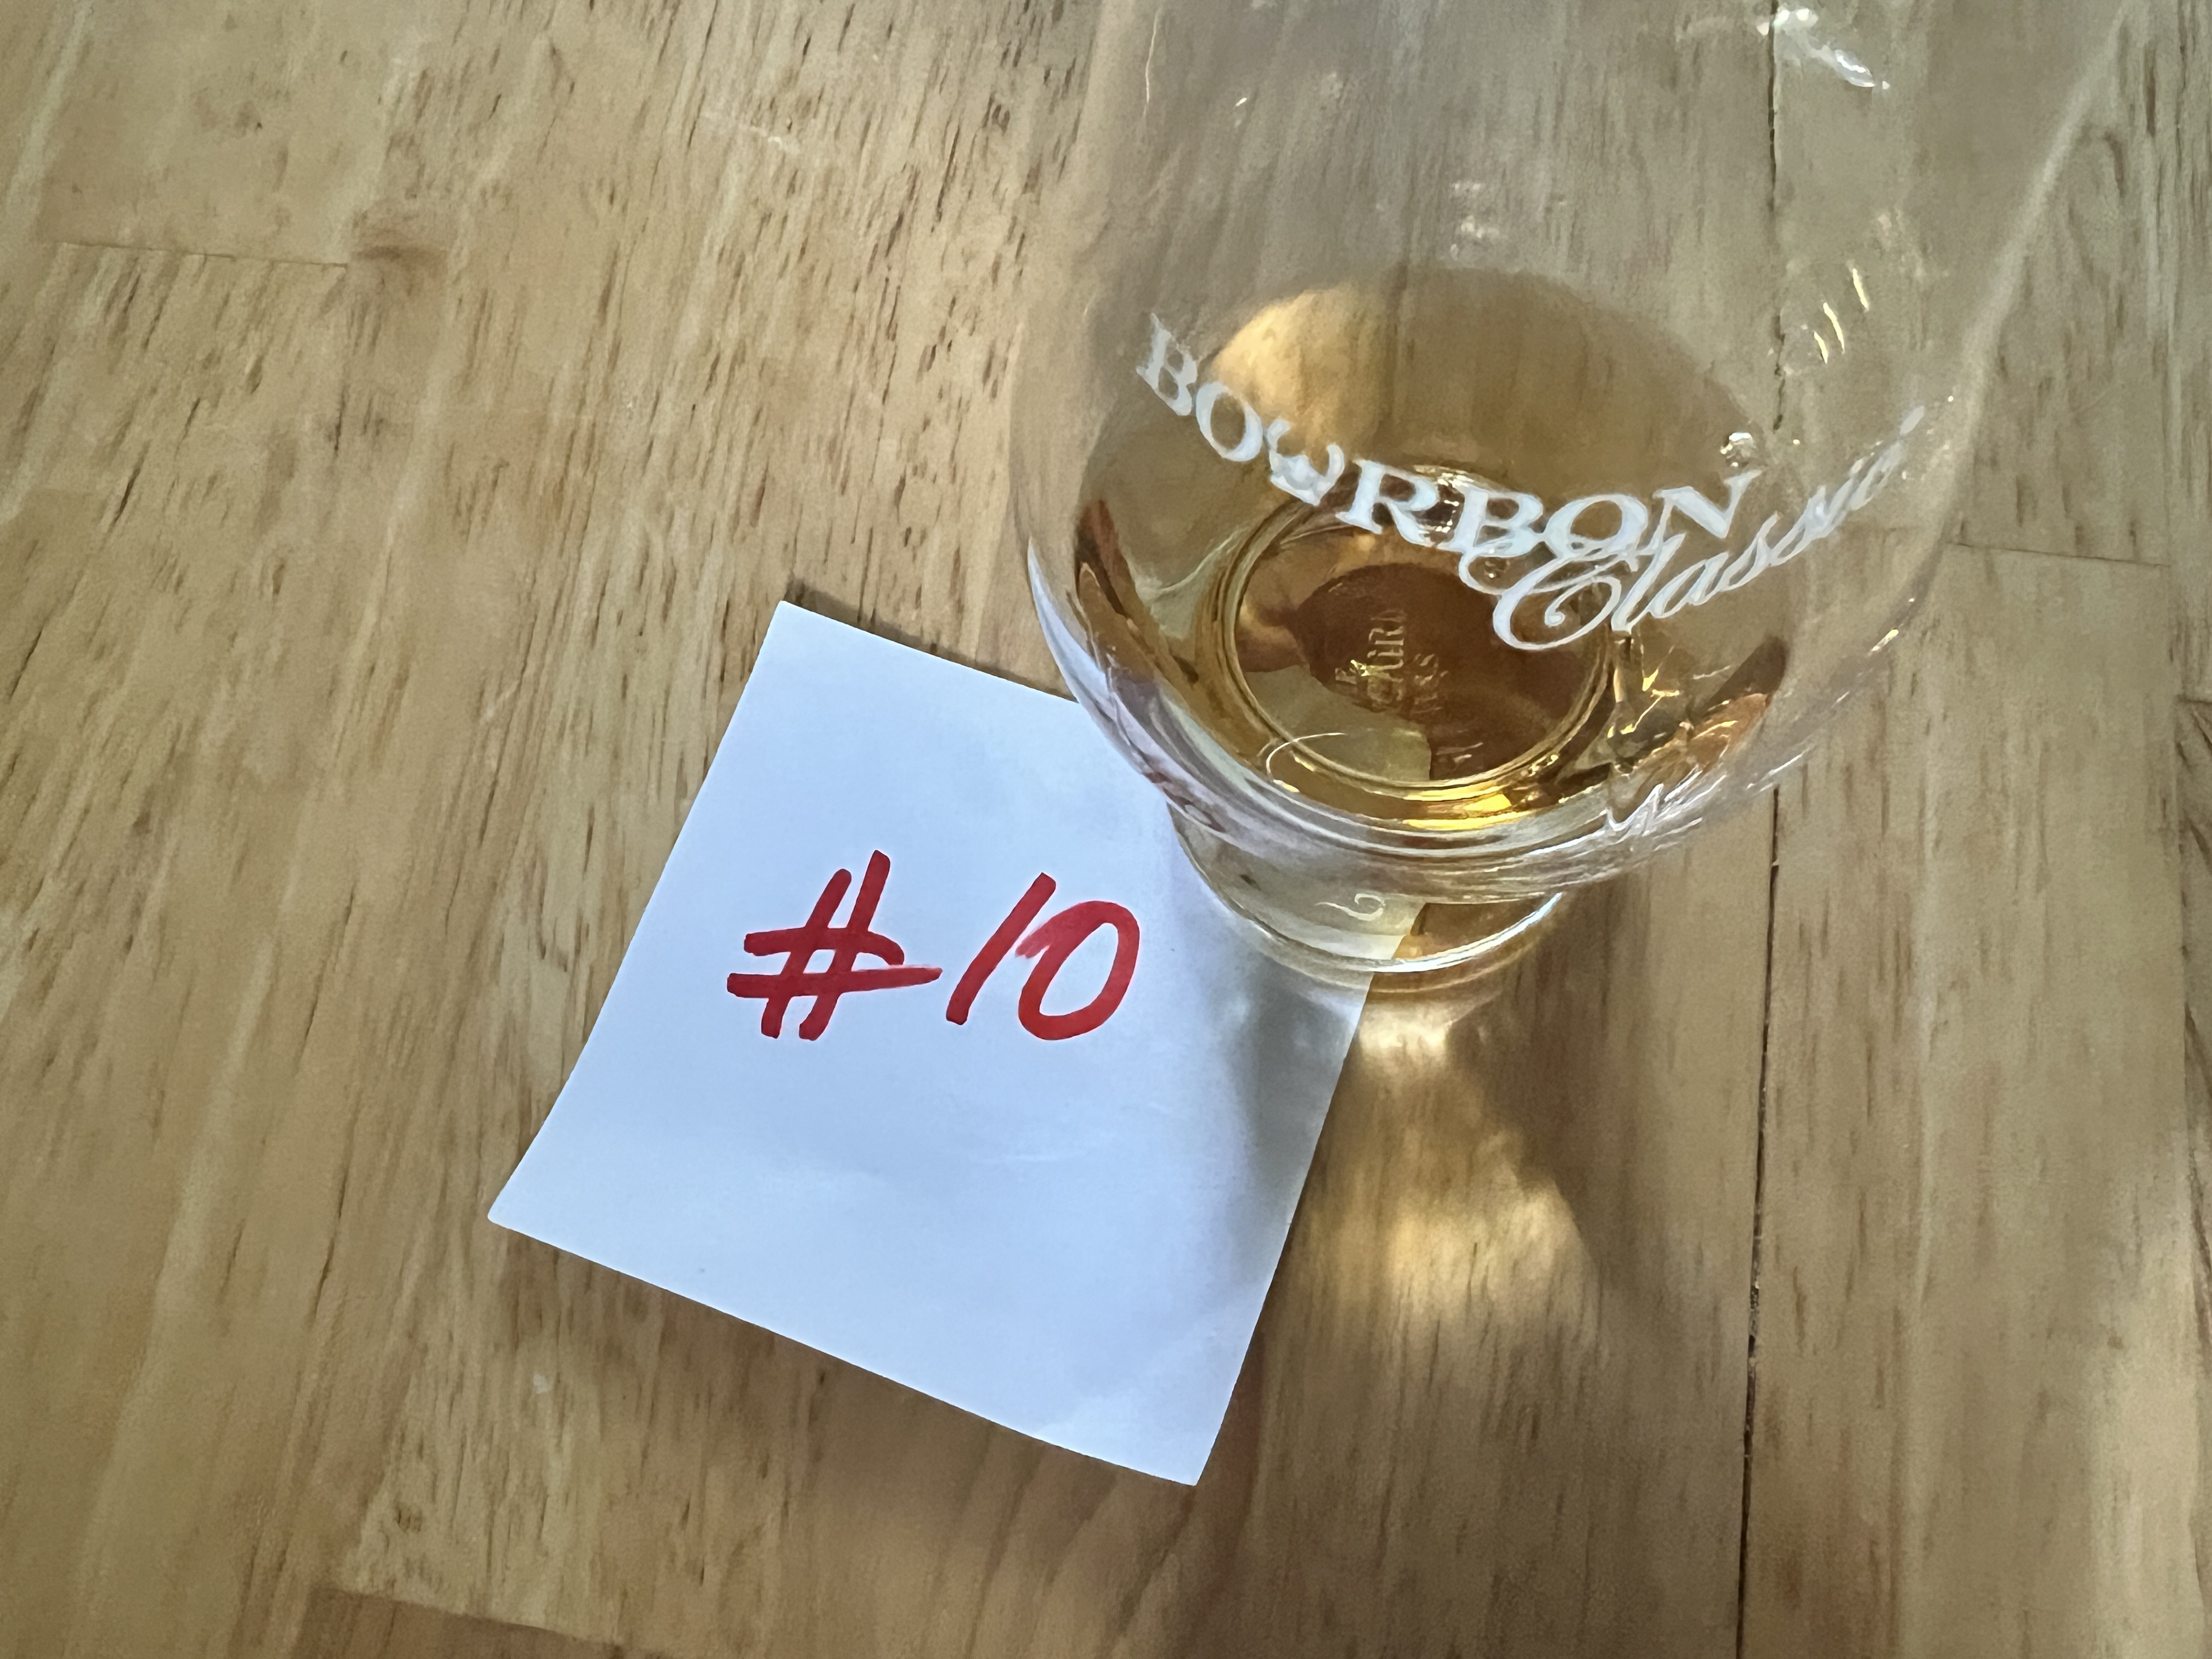 Smoothest Bourbons Under $100